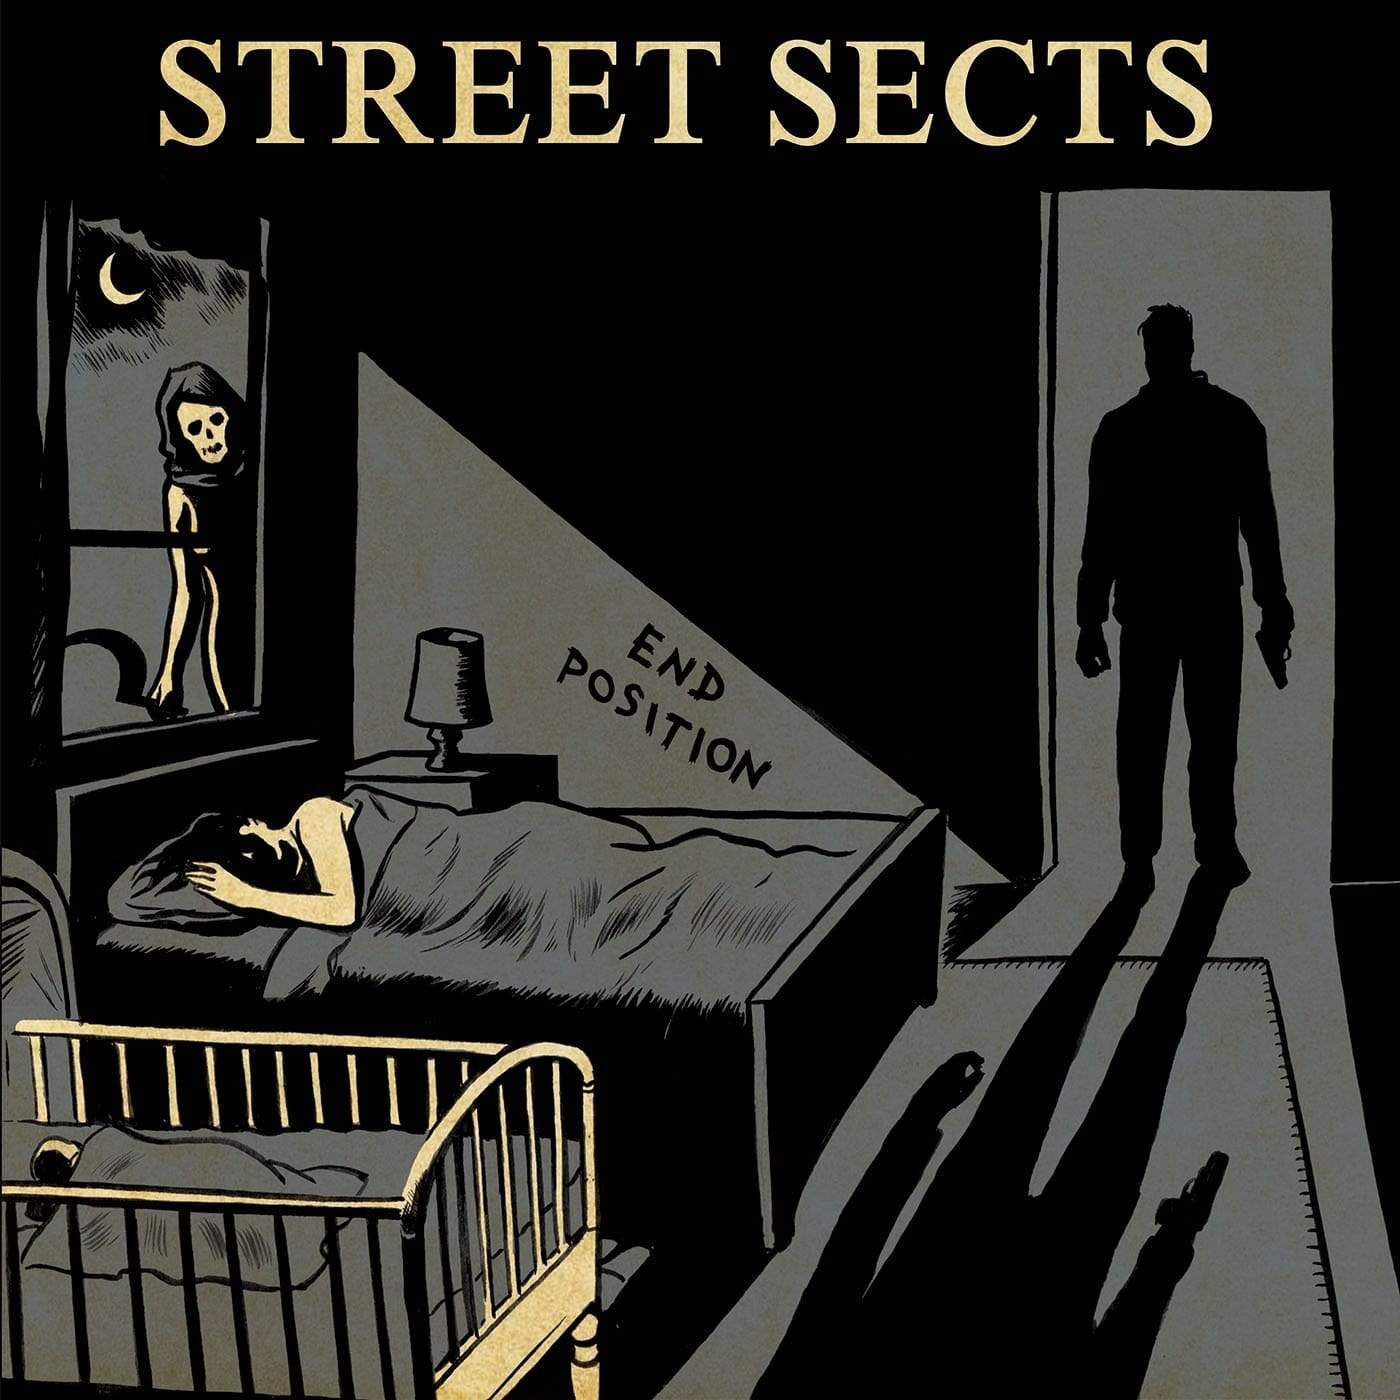 The Flenser Vinyl Street Sects "End Position" LP